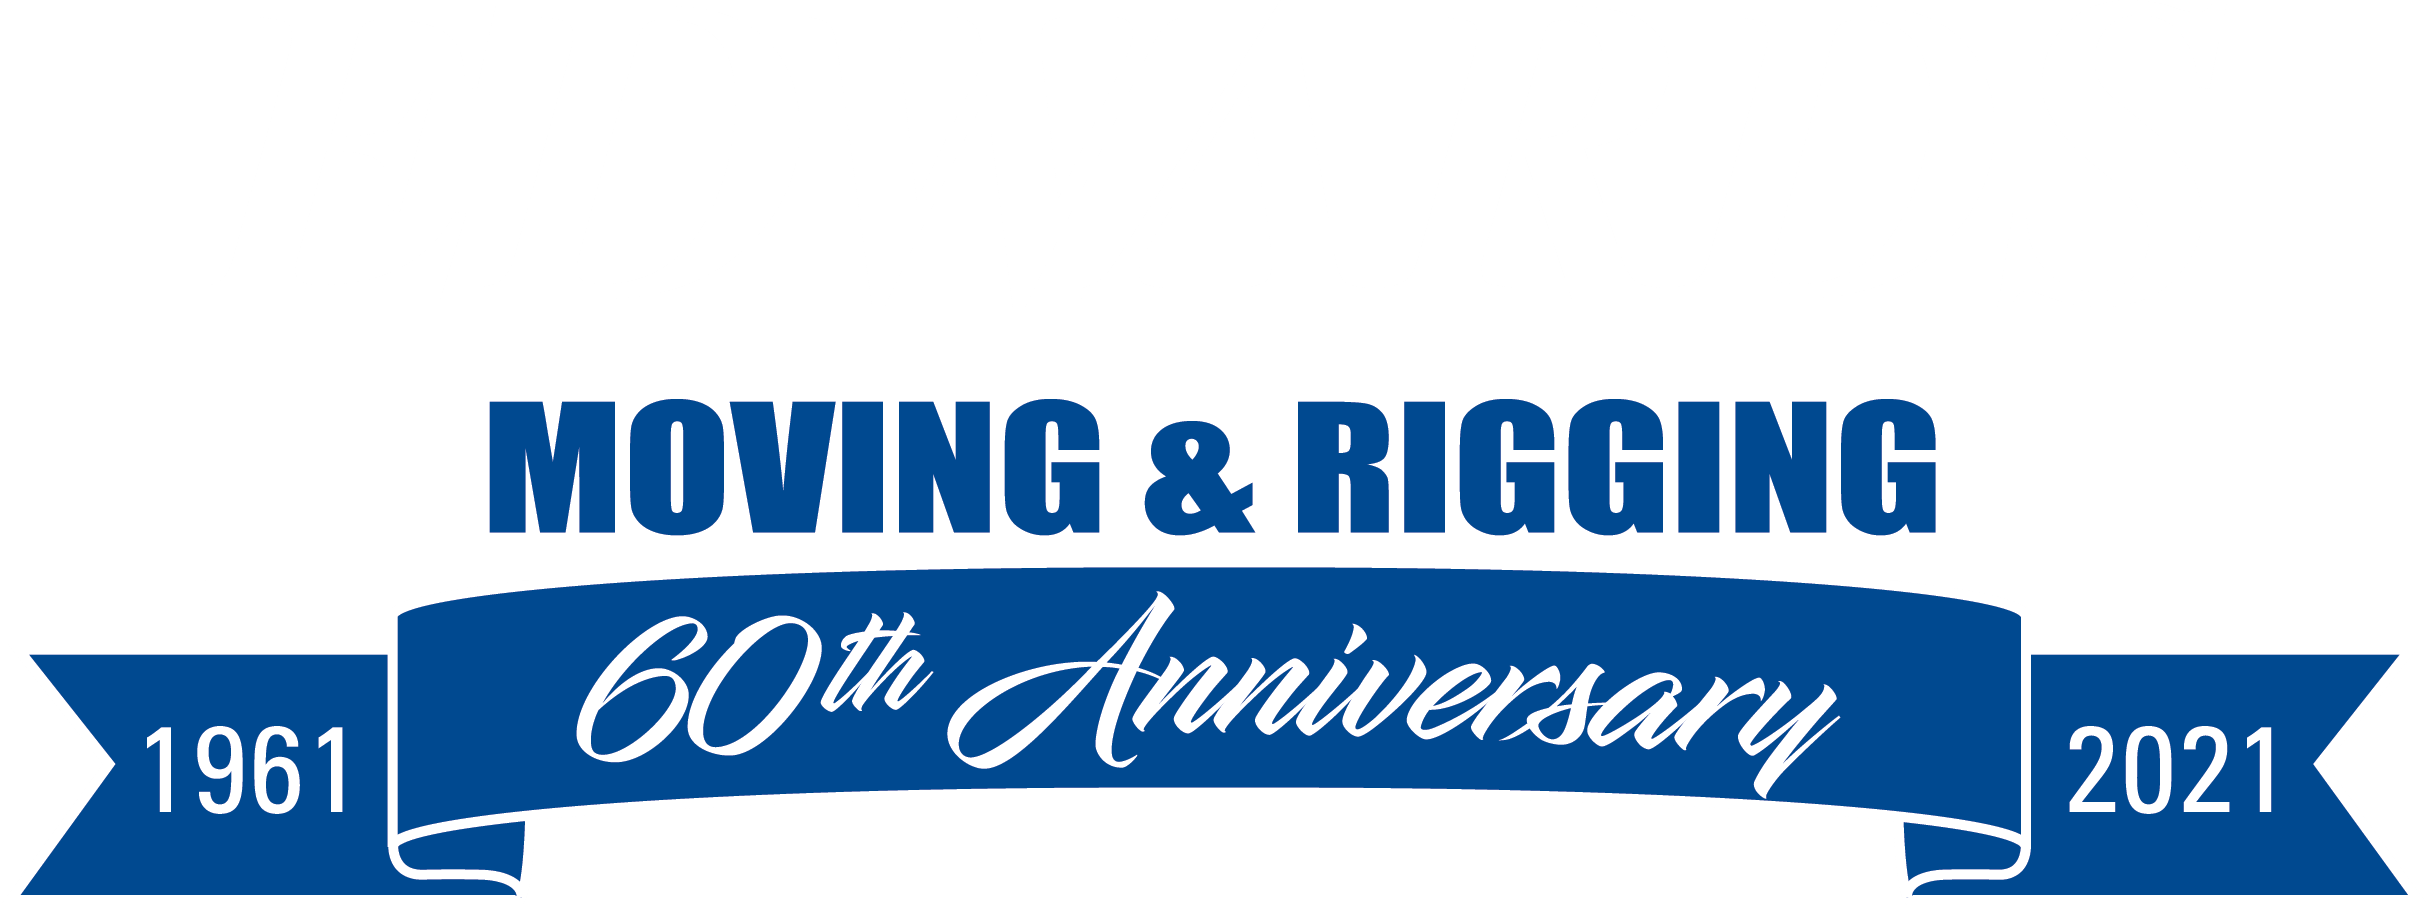 Edwards Moving & Rigging